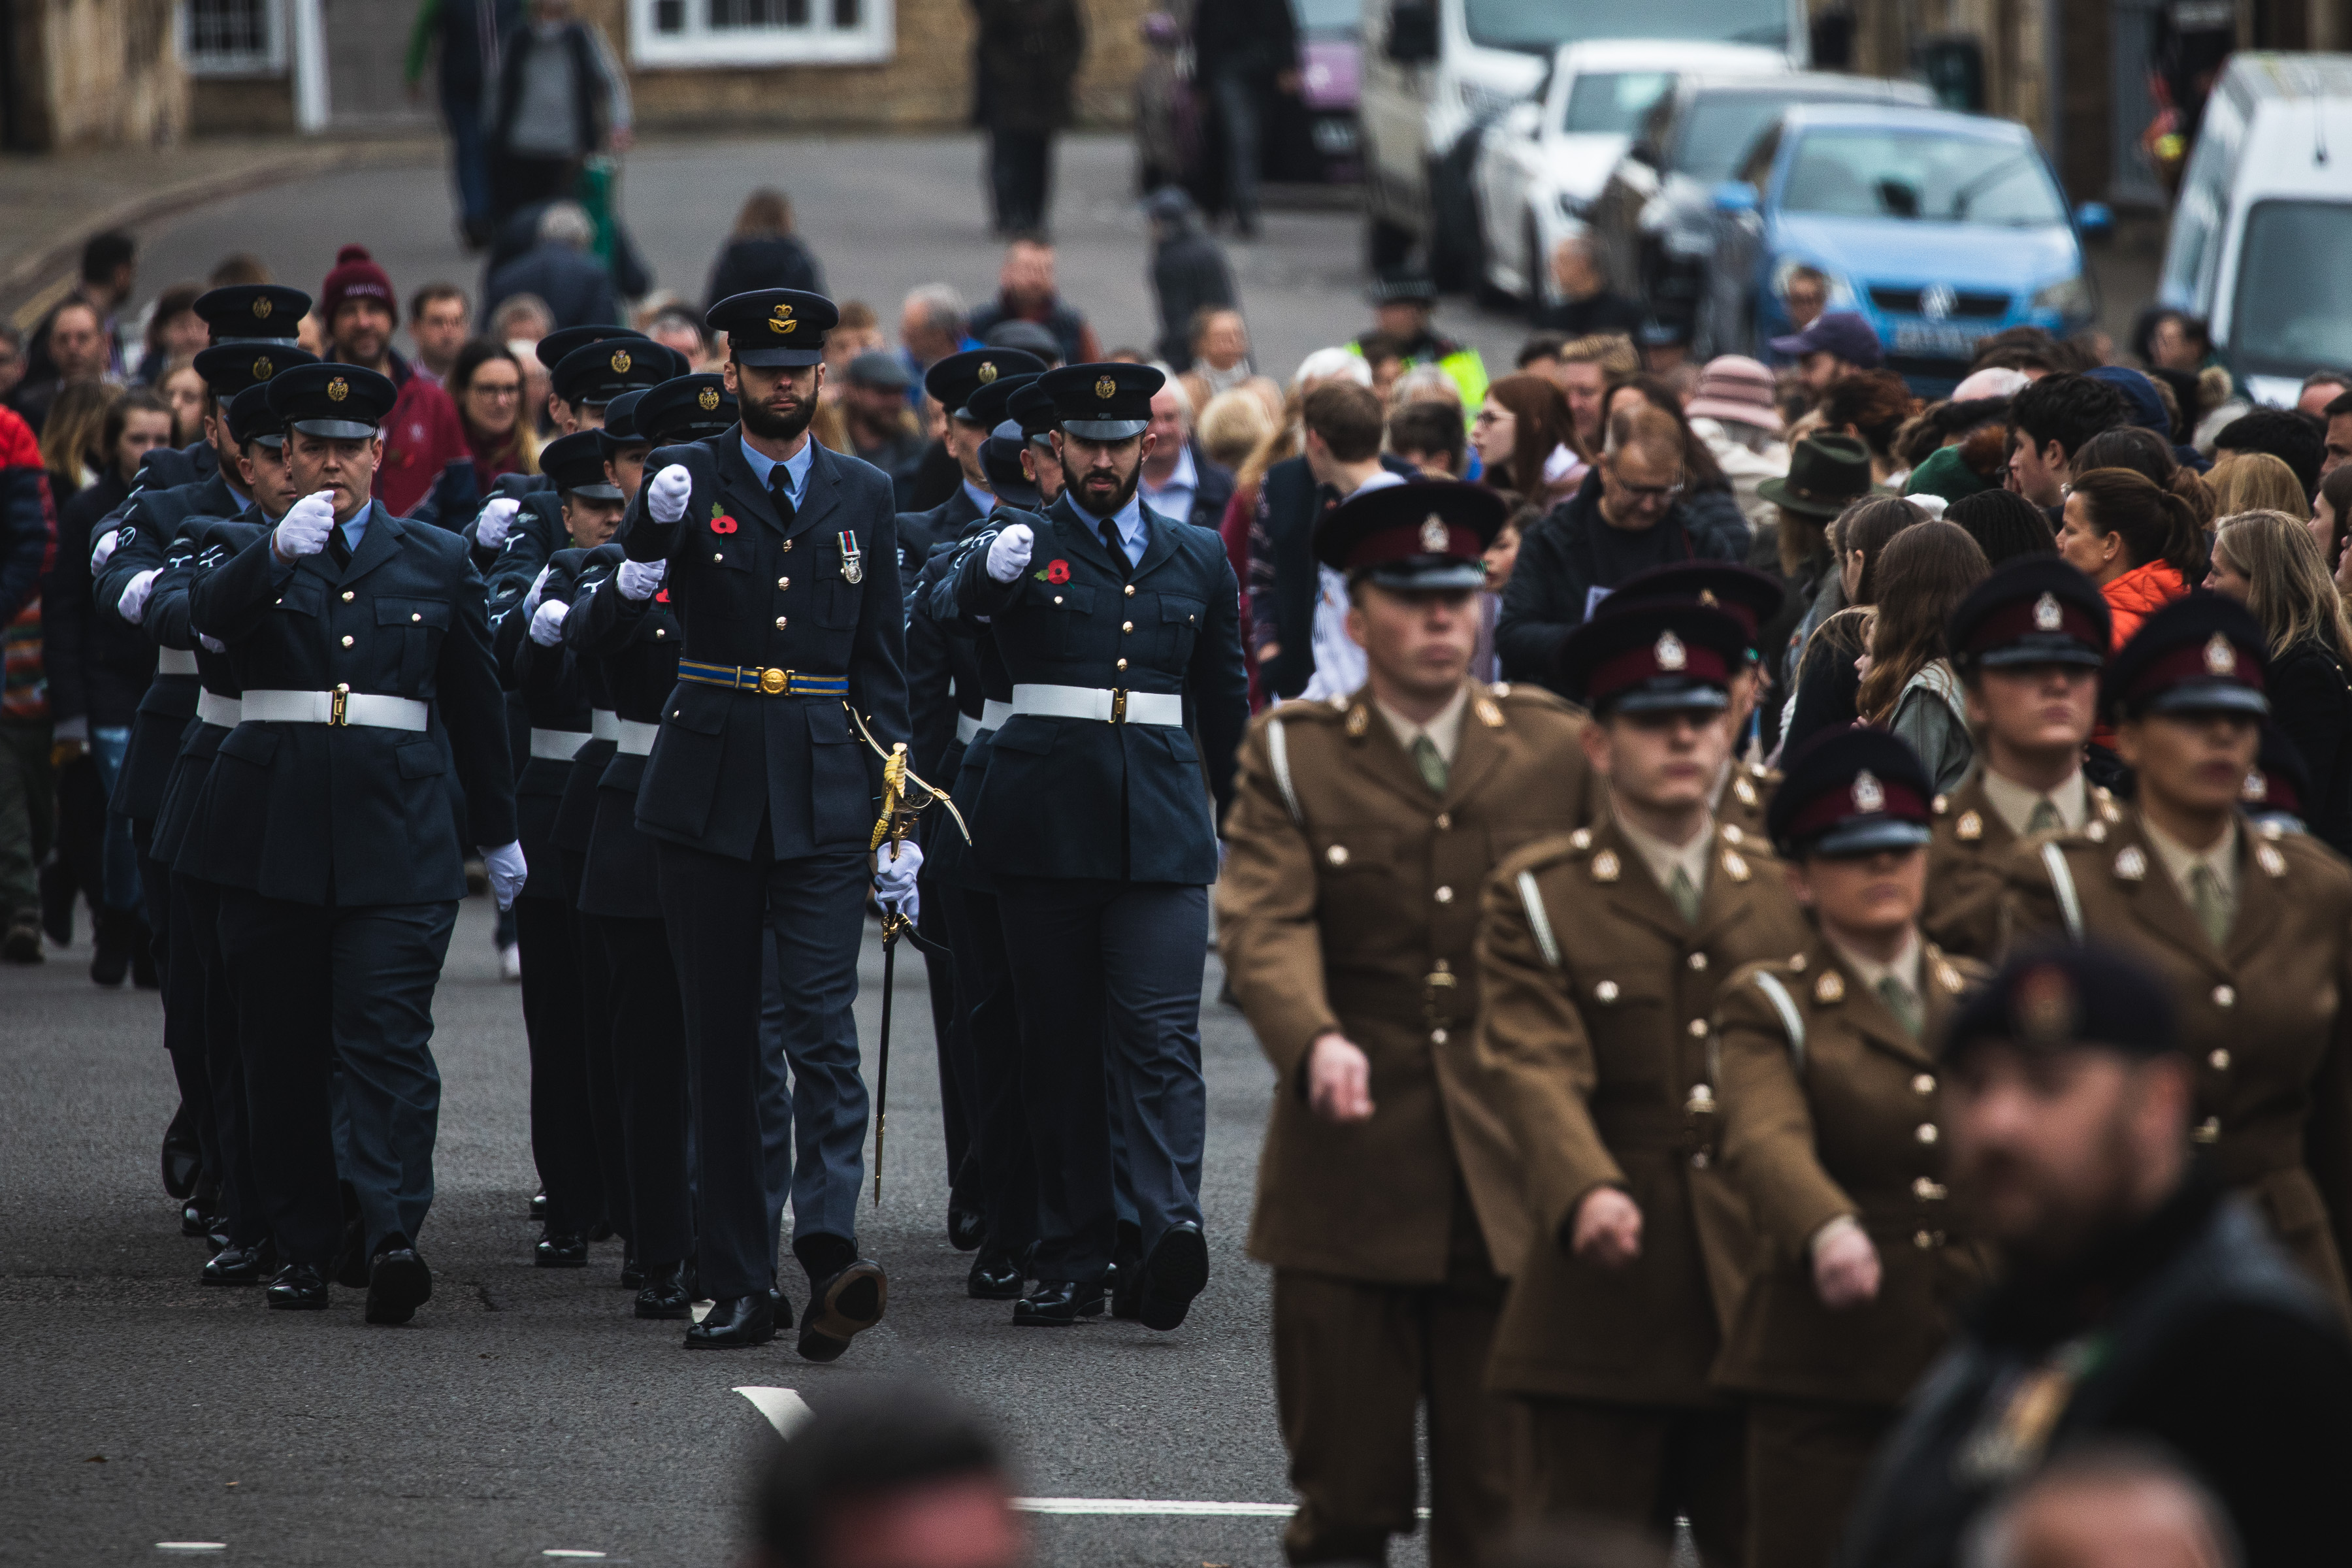 RAF Wittering’s detachment parades through Stamford